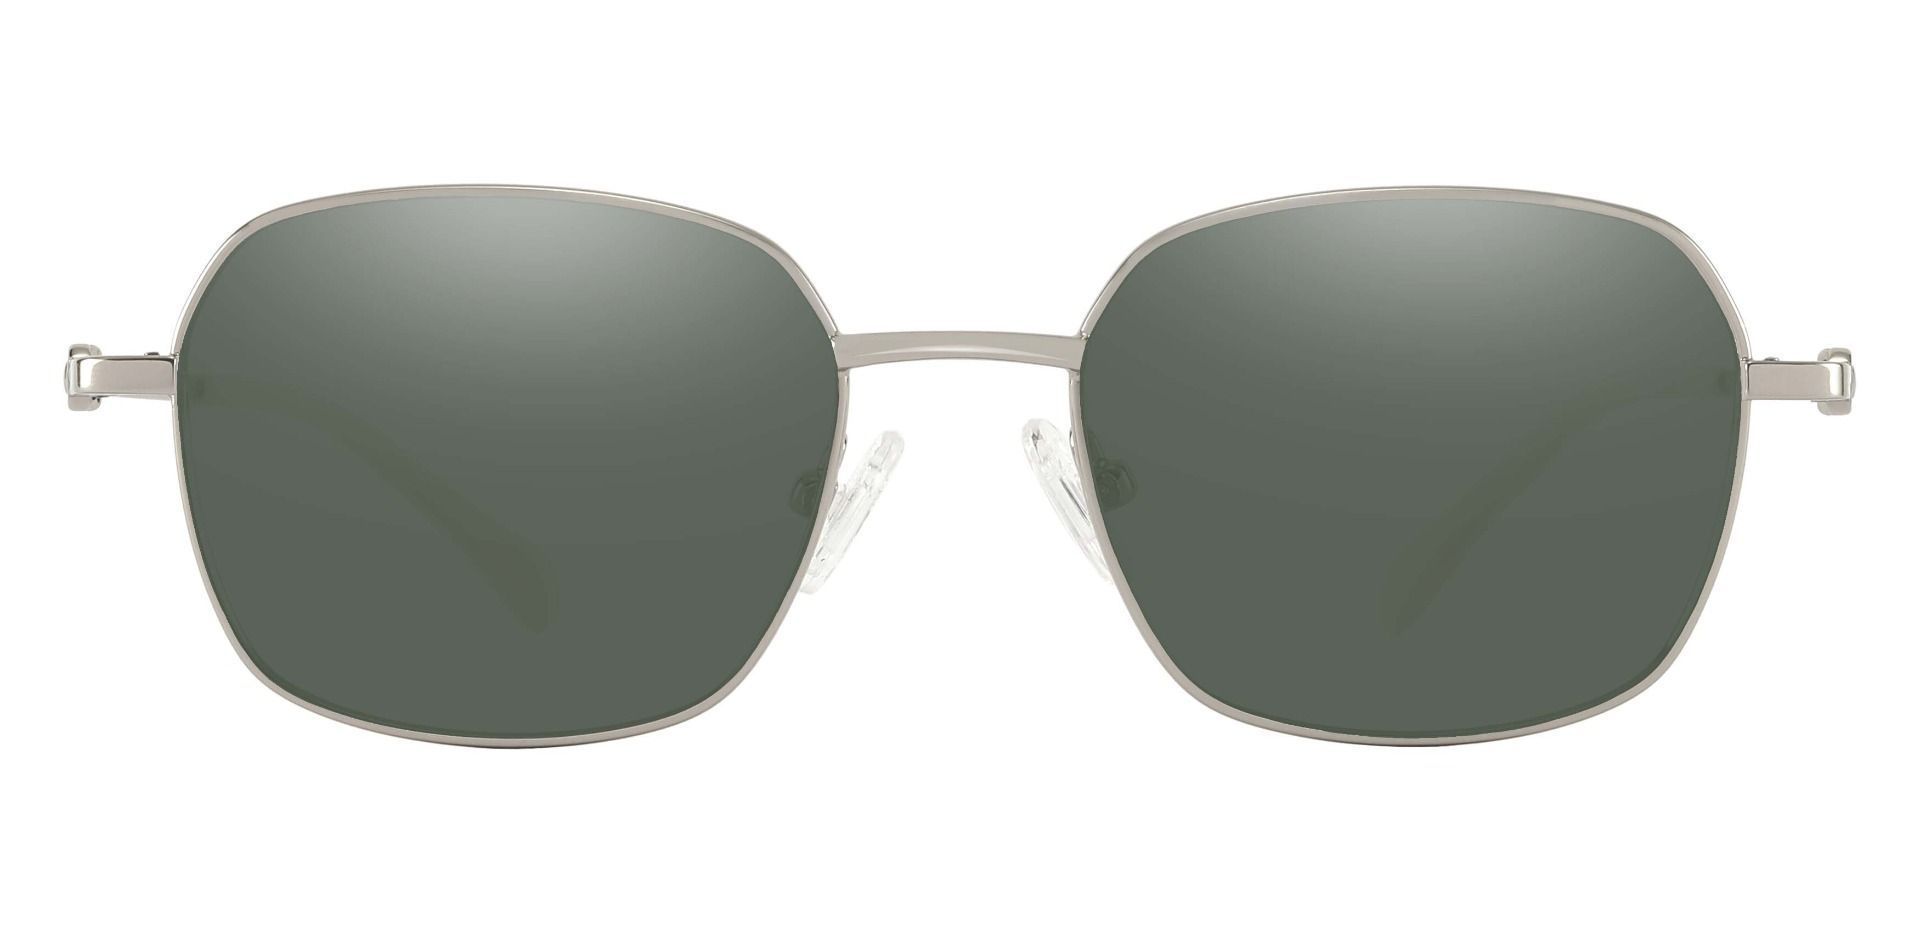 Averill Geometric Non-Rx Sunglasses - Silver Frame With Green Lenses